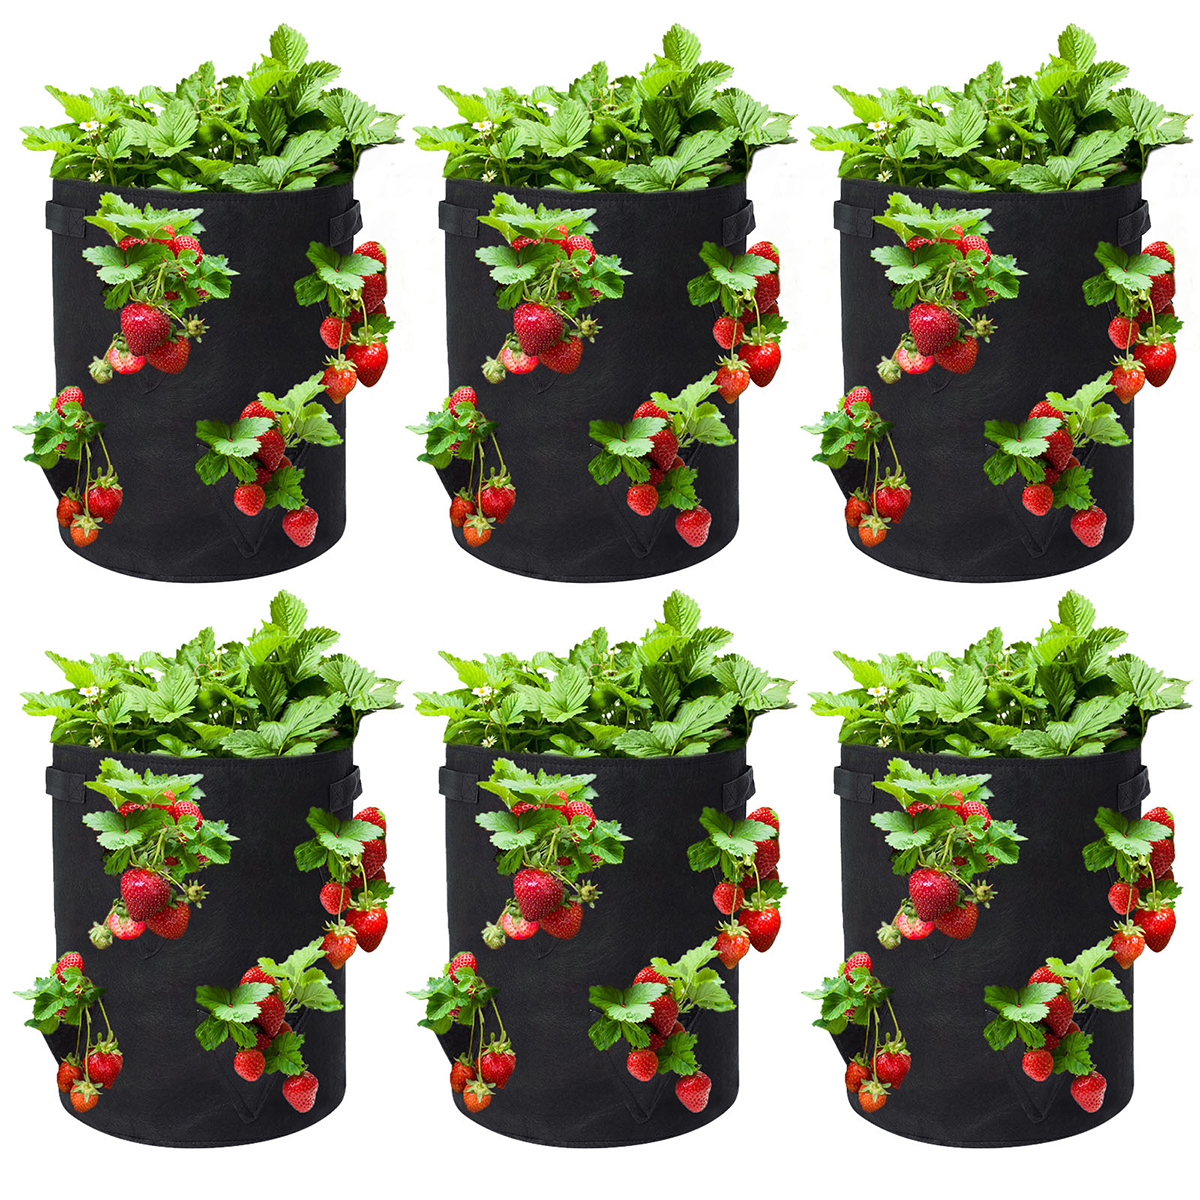 46pcs-Strawberry-Grow-Bags-Growing-Pot-8-Side-Grow-Pockets-Large-10-Gallon-1938101-4